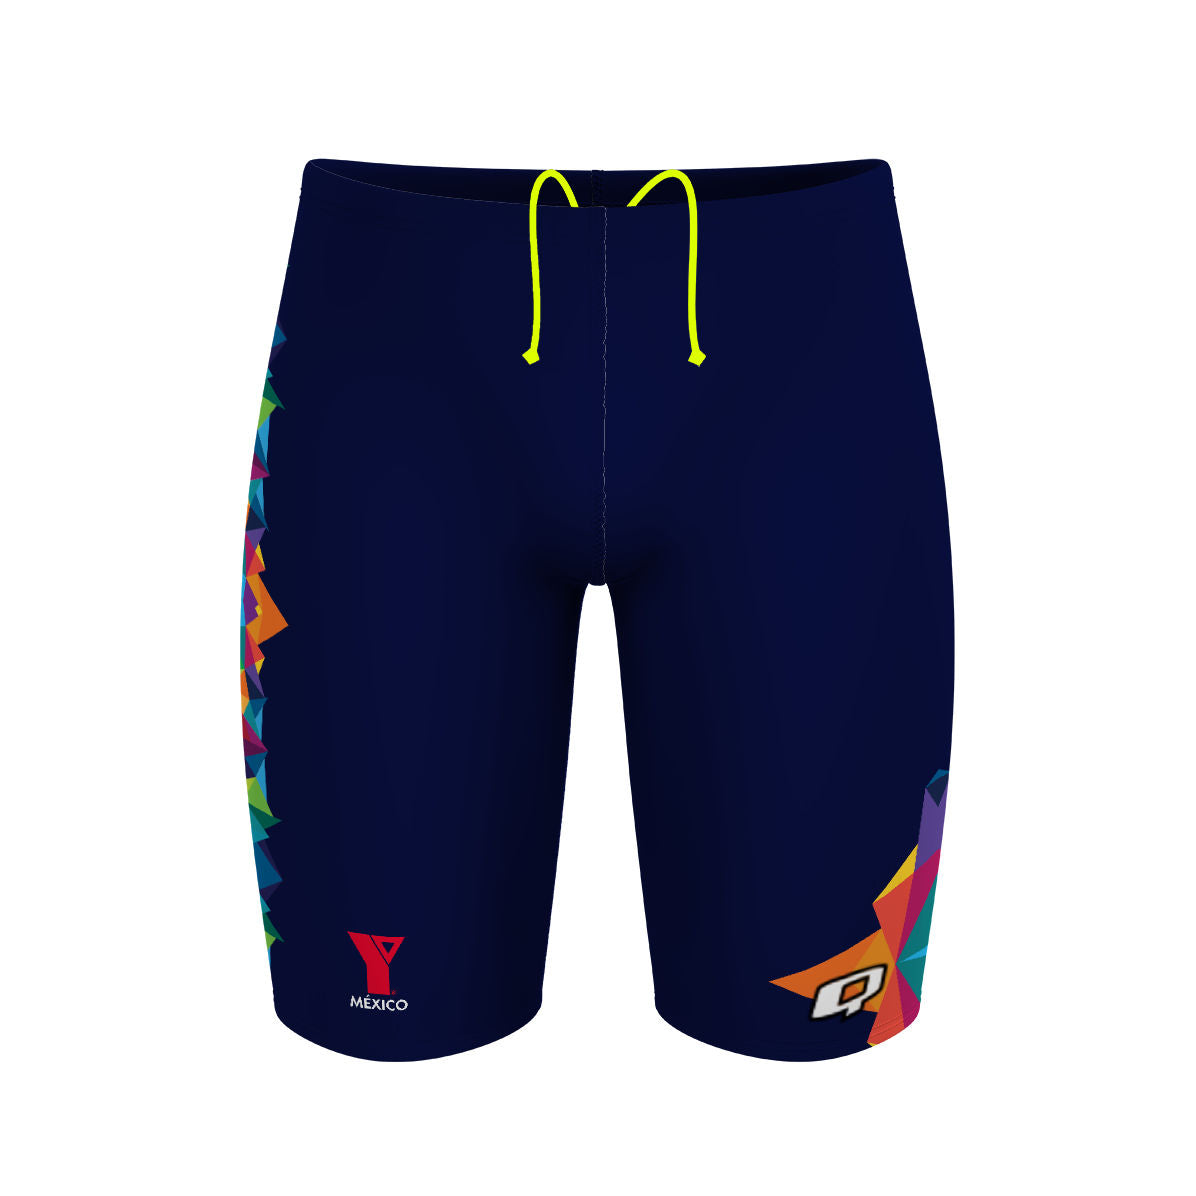 YMCA 01 - Jammer Swimsuit